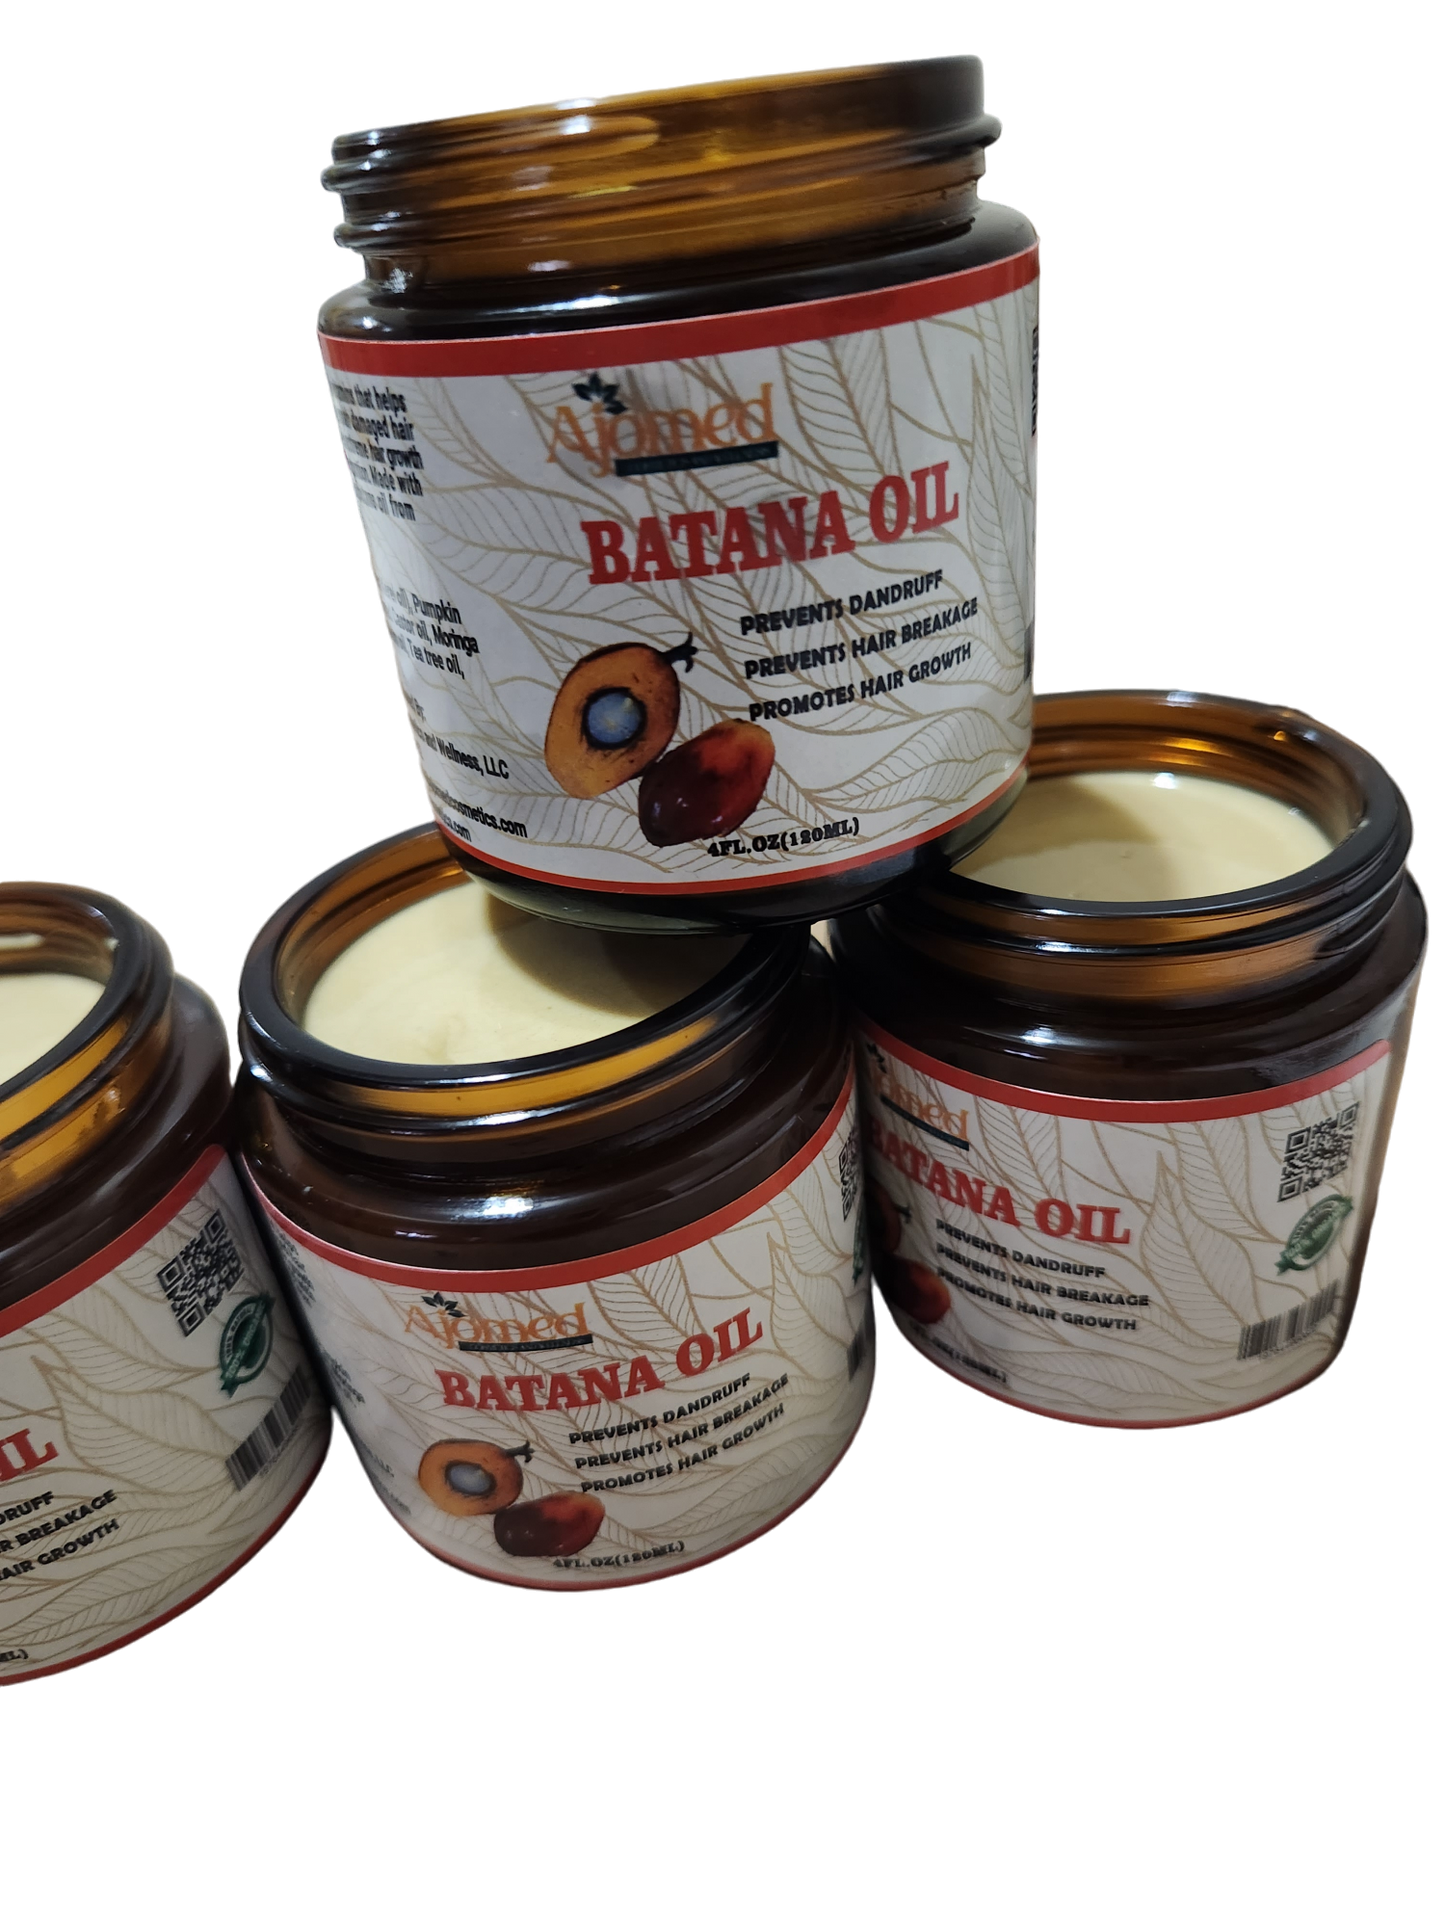 BATANA Oil Hair Growth butter- Organic, Handmade natural hair butter , leave in oil condioner-4oz